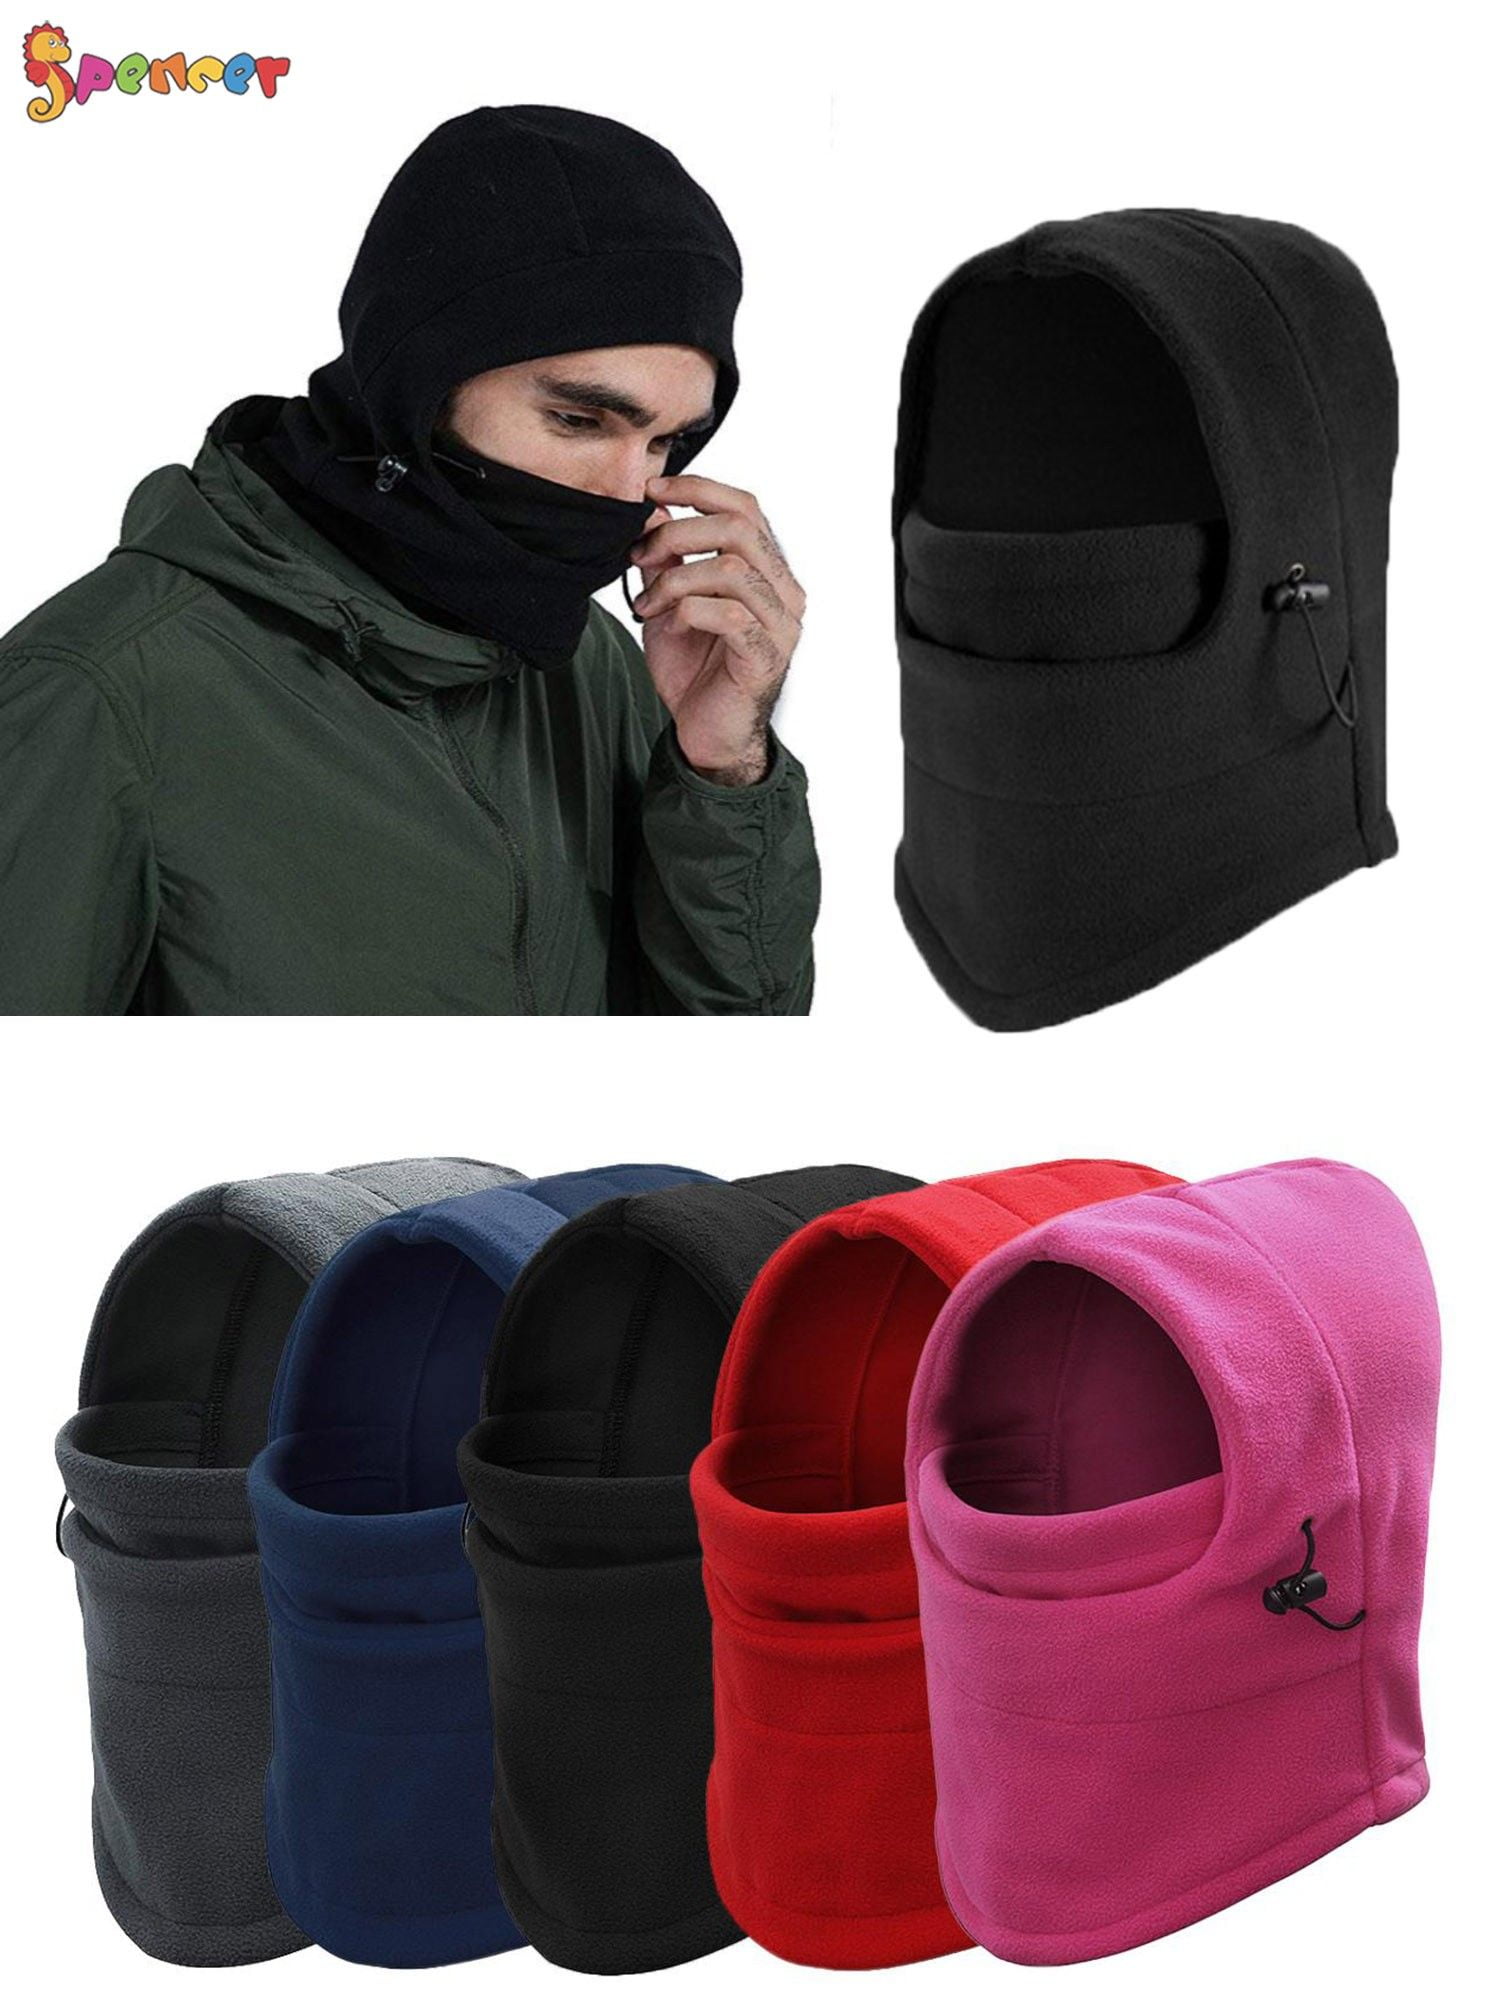 Mens Winter Thermal Fleece Balaclava Ski Face Mask Neck Warmer Hood Hat Cap Hot 